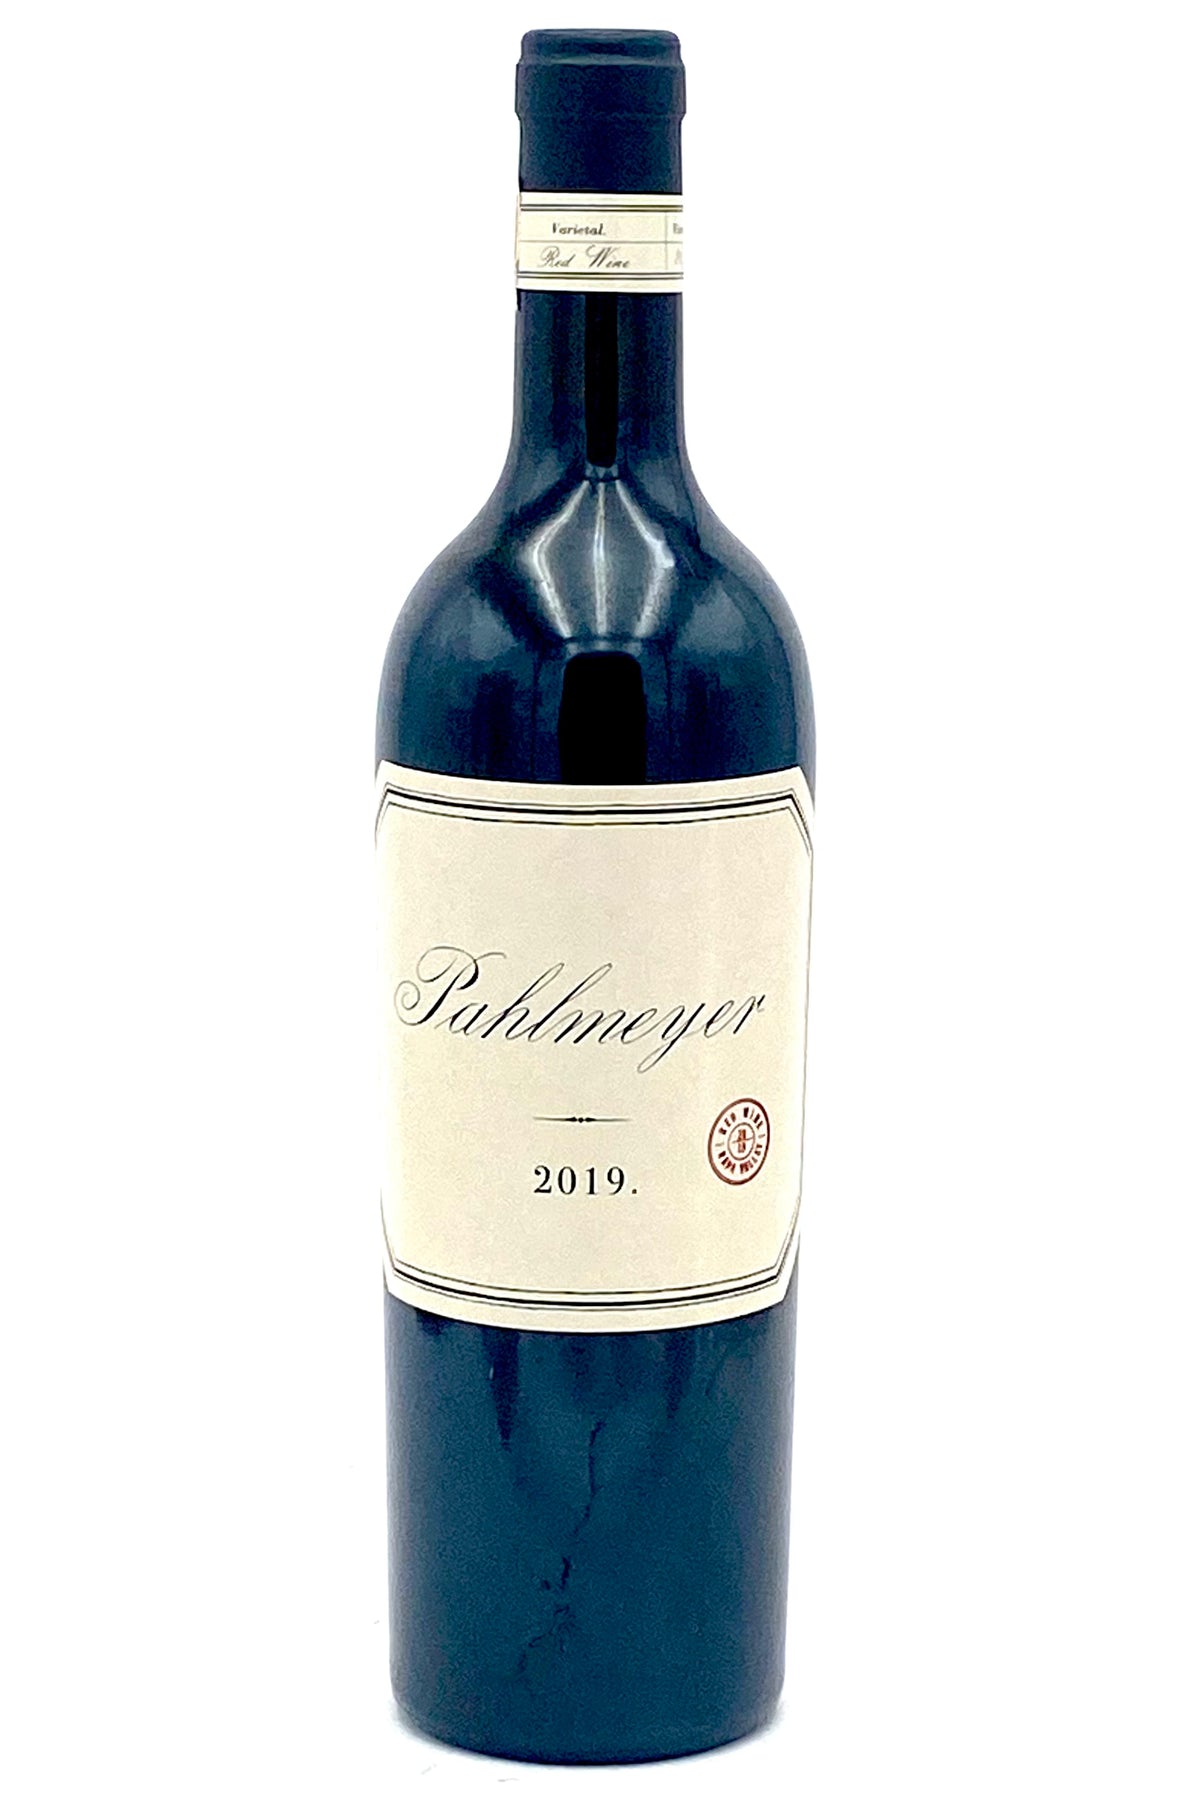 Pahlmeyer 2019 Napa Valley Proprietary Red Wine